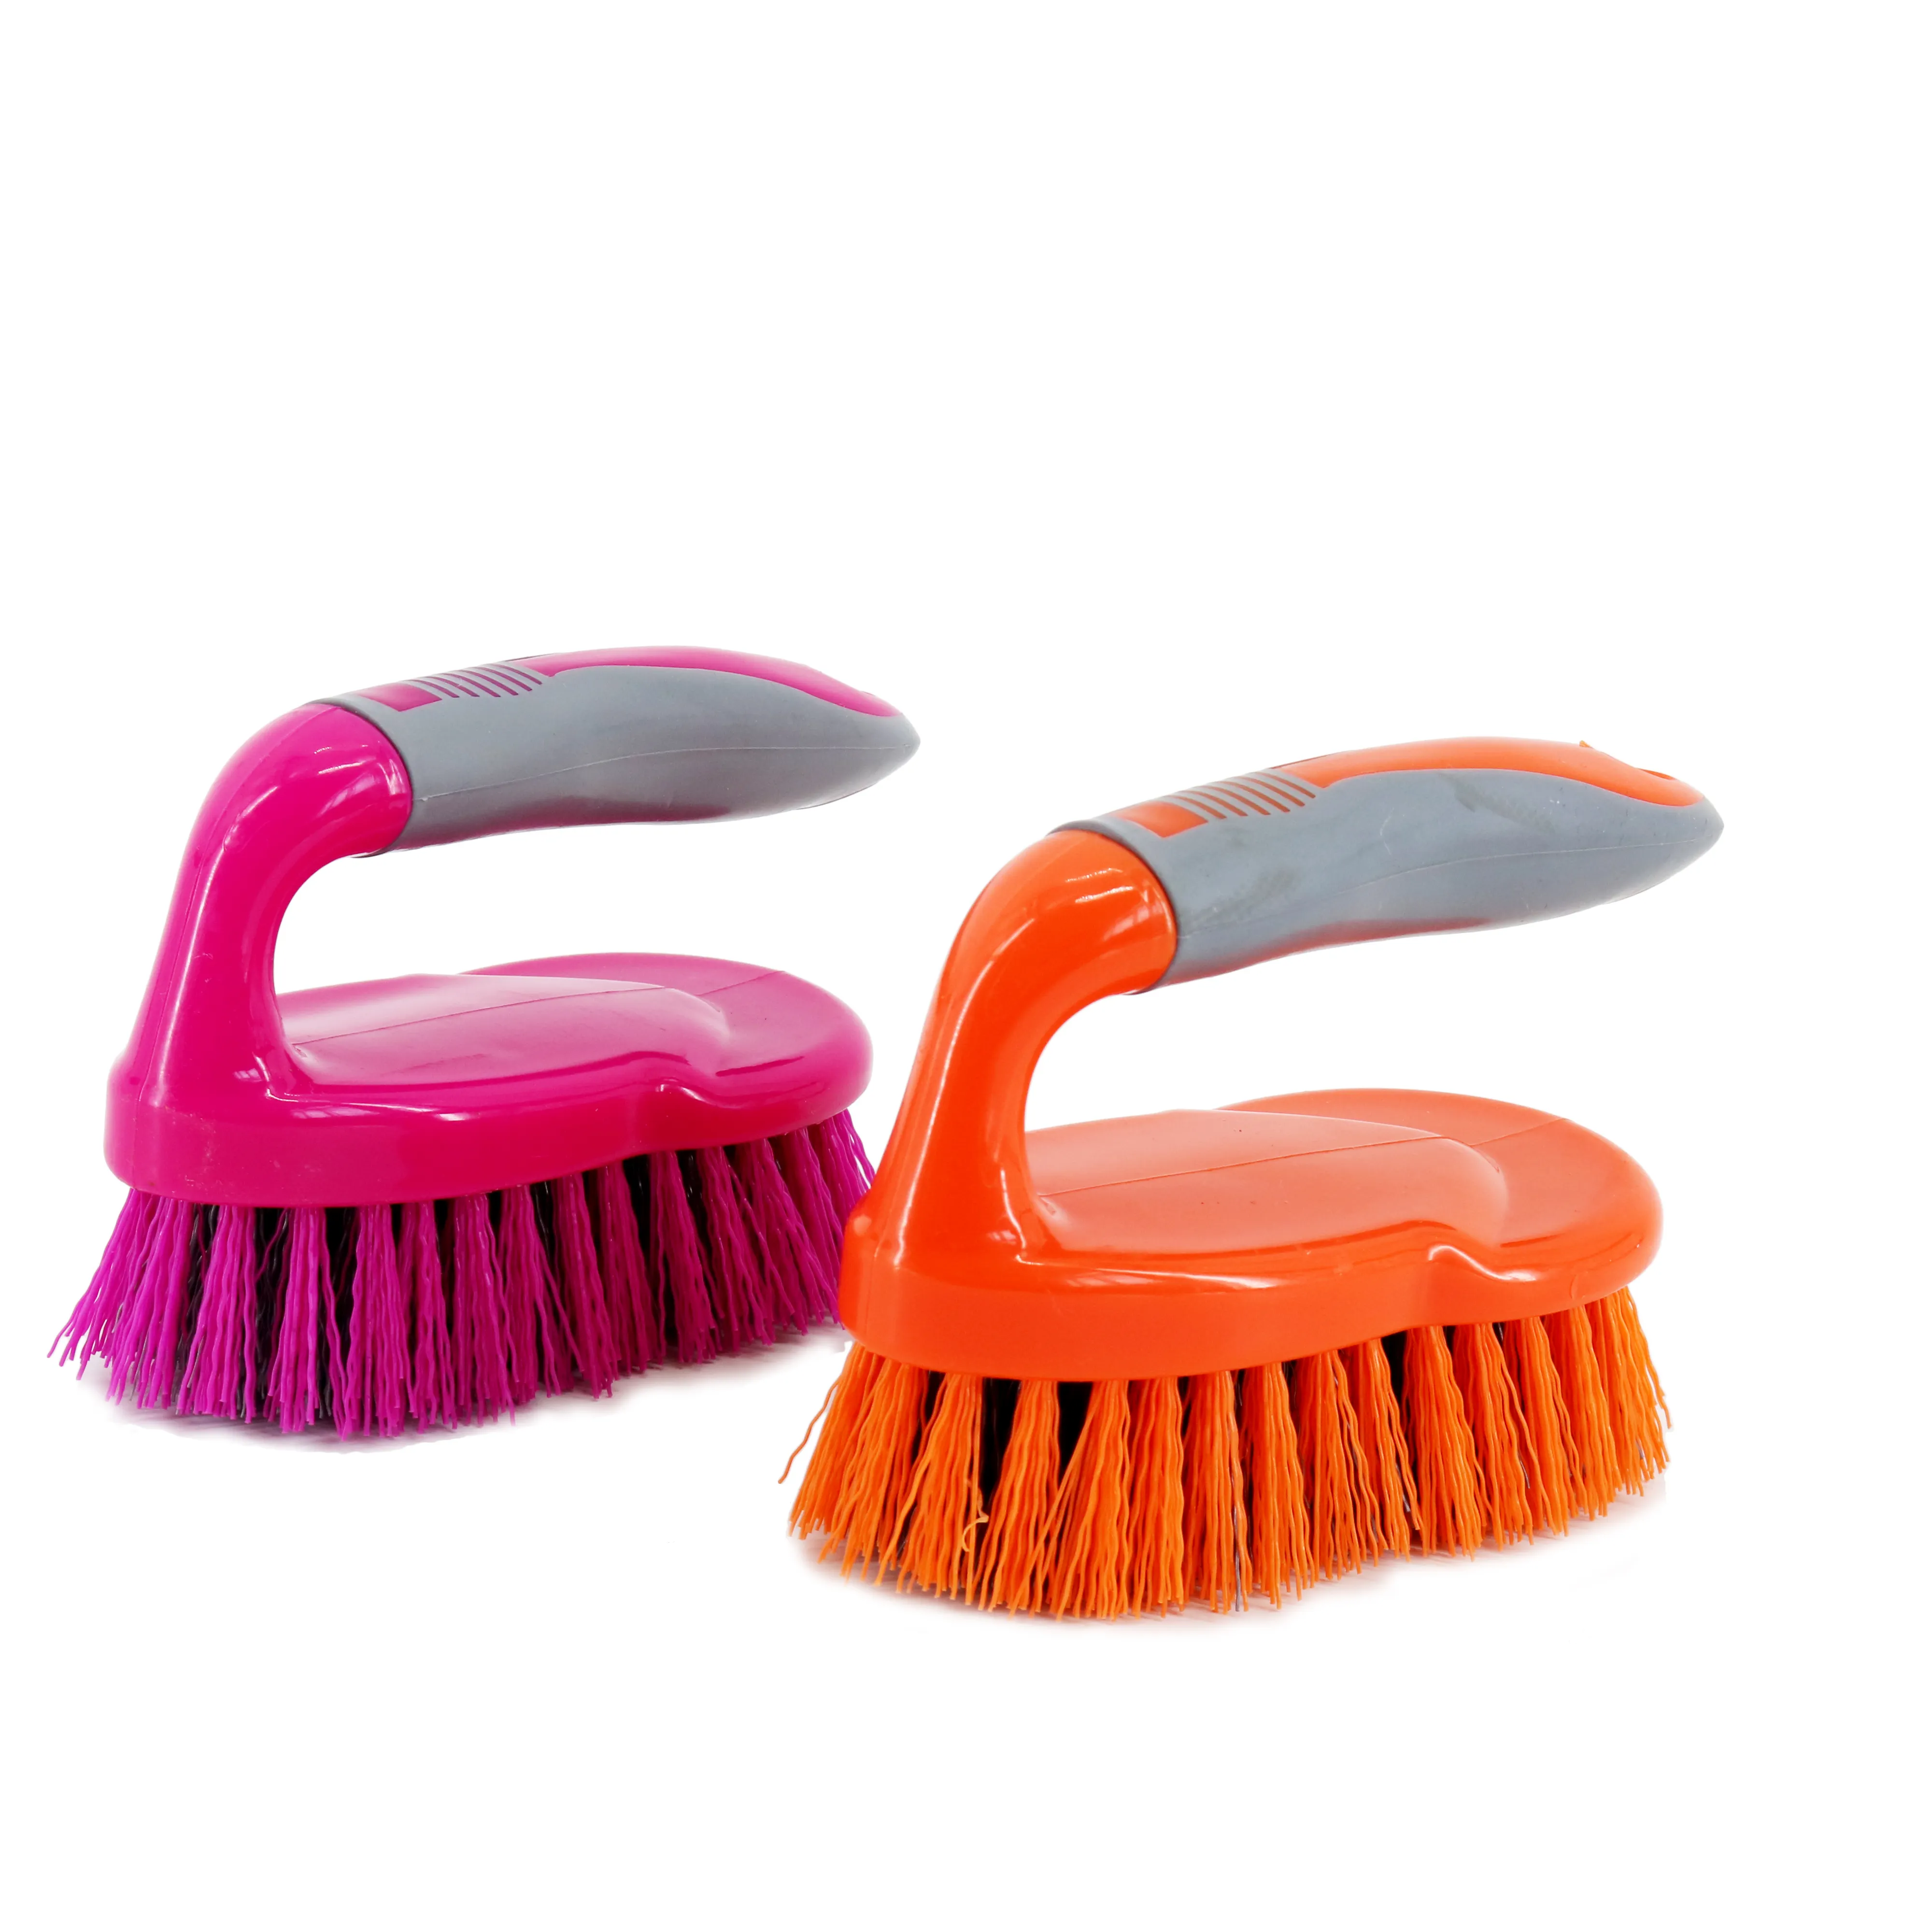 Household Plastic Durable Cleaning Scrub Brush Laundry Clothes Brush Clothing Brush